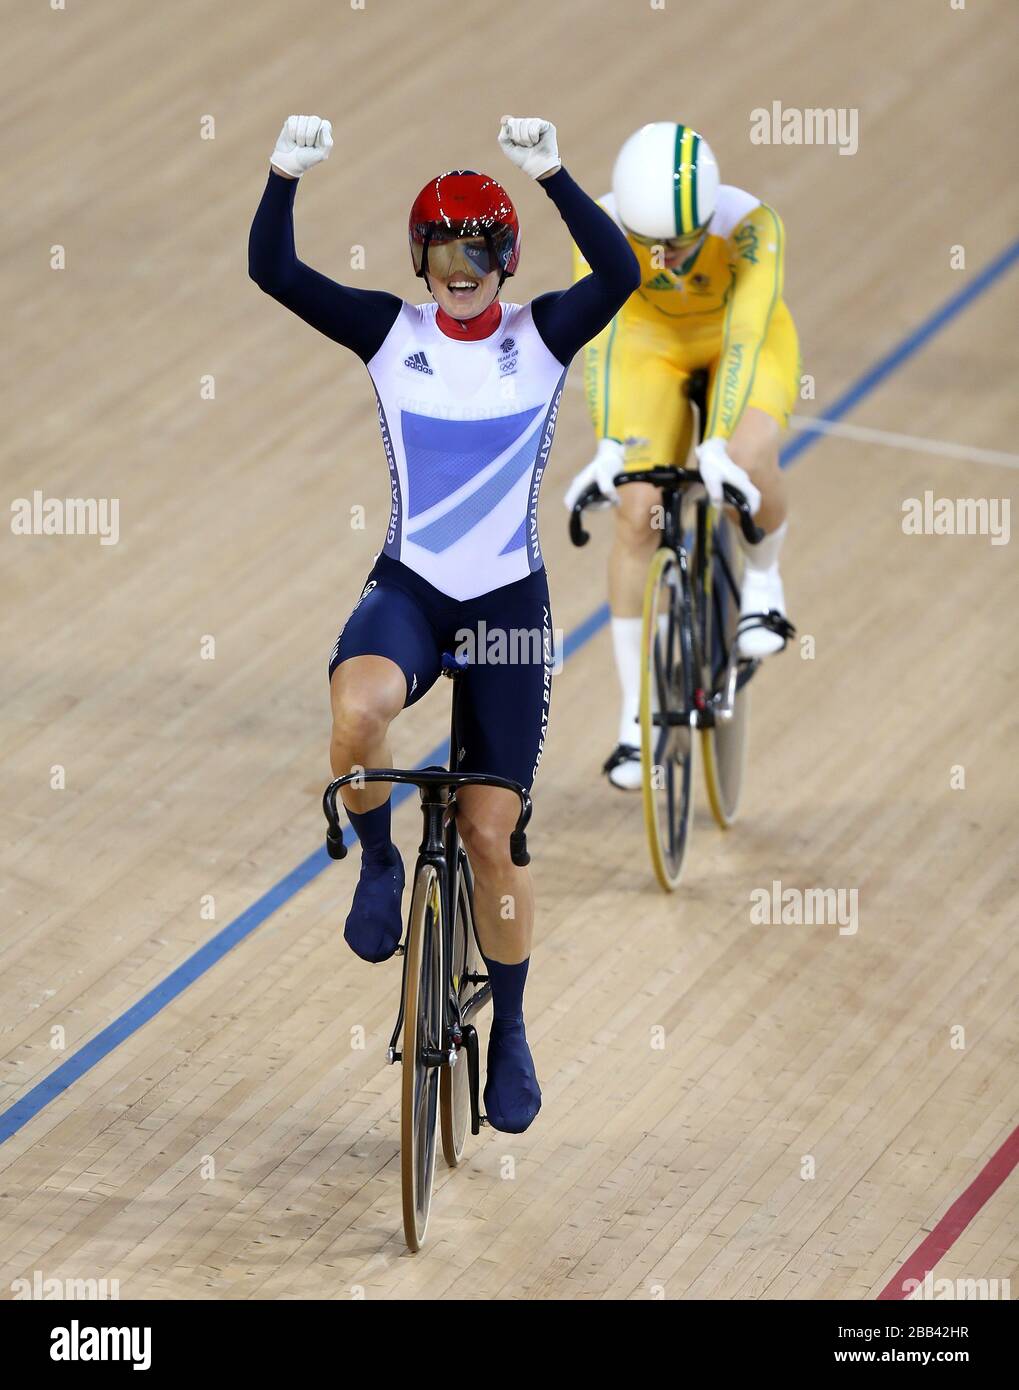 Great Britain's Victoria Pendleton celebrates her victory in the Kierin. Stock Photo